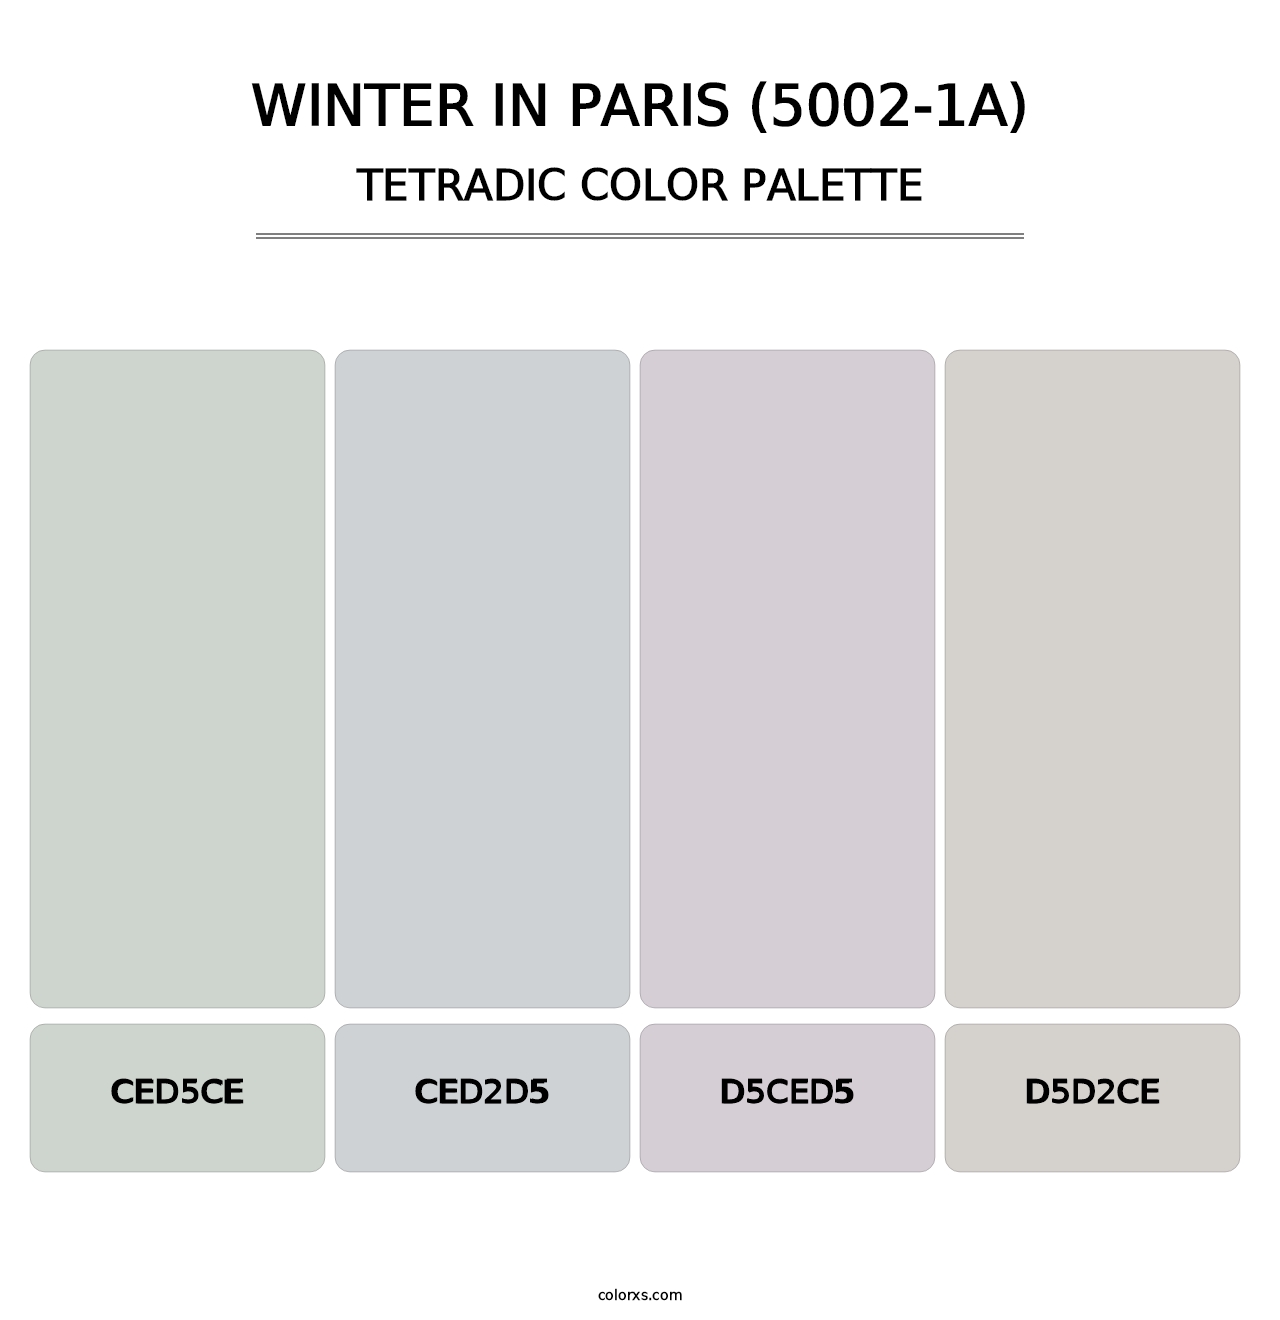 Winter in Paris (5002-1A) - Tetradic Color Palette